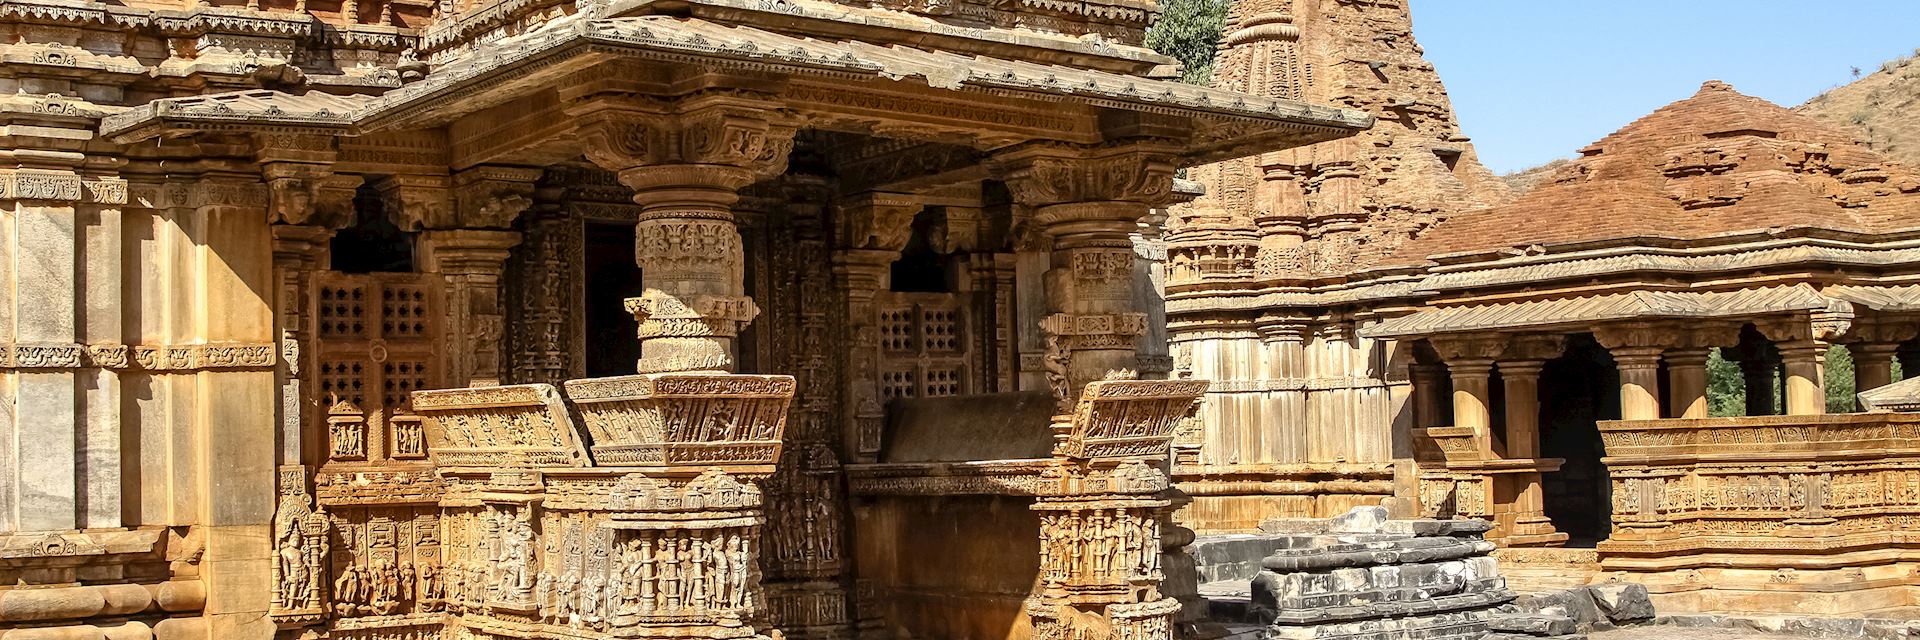 Eklingji temples, near Devigarh